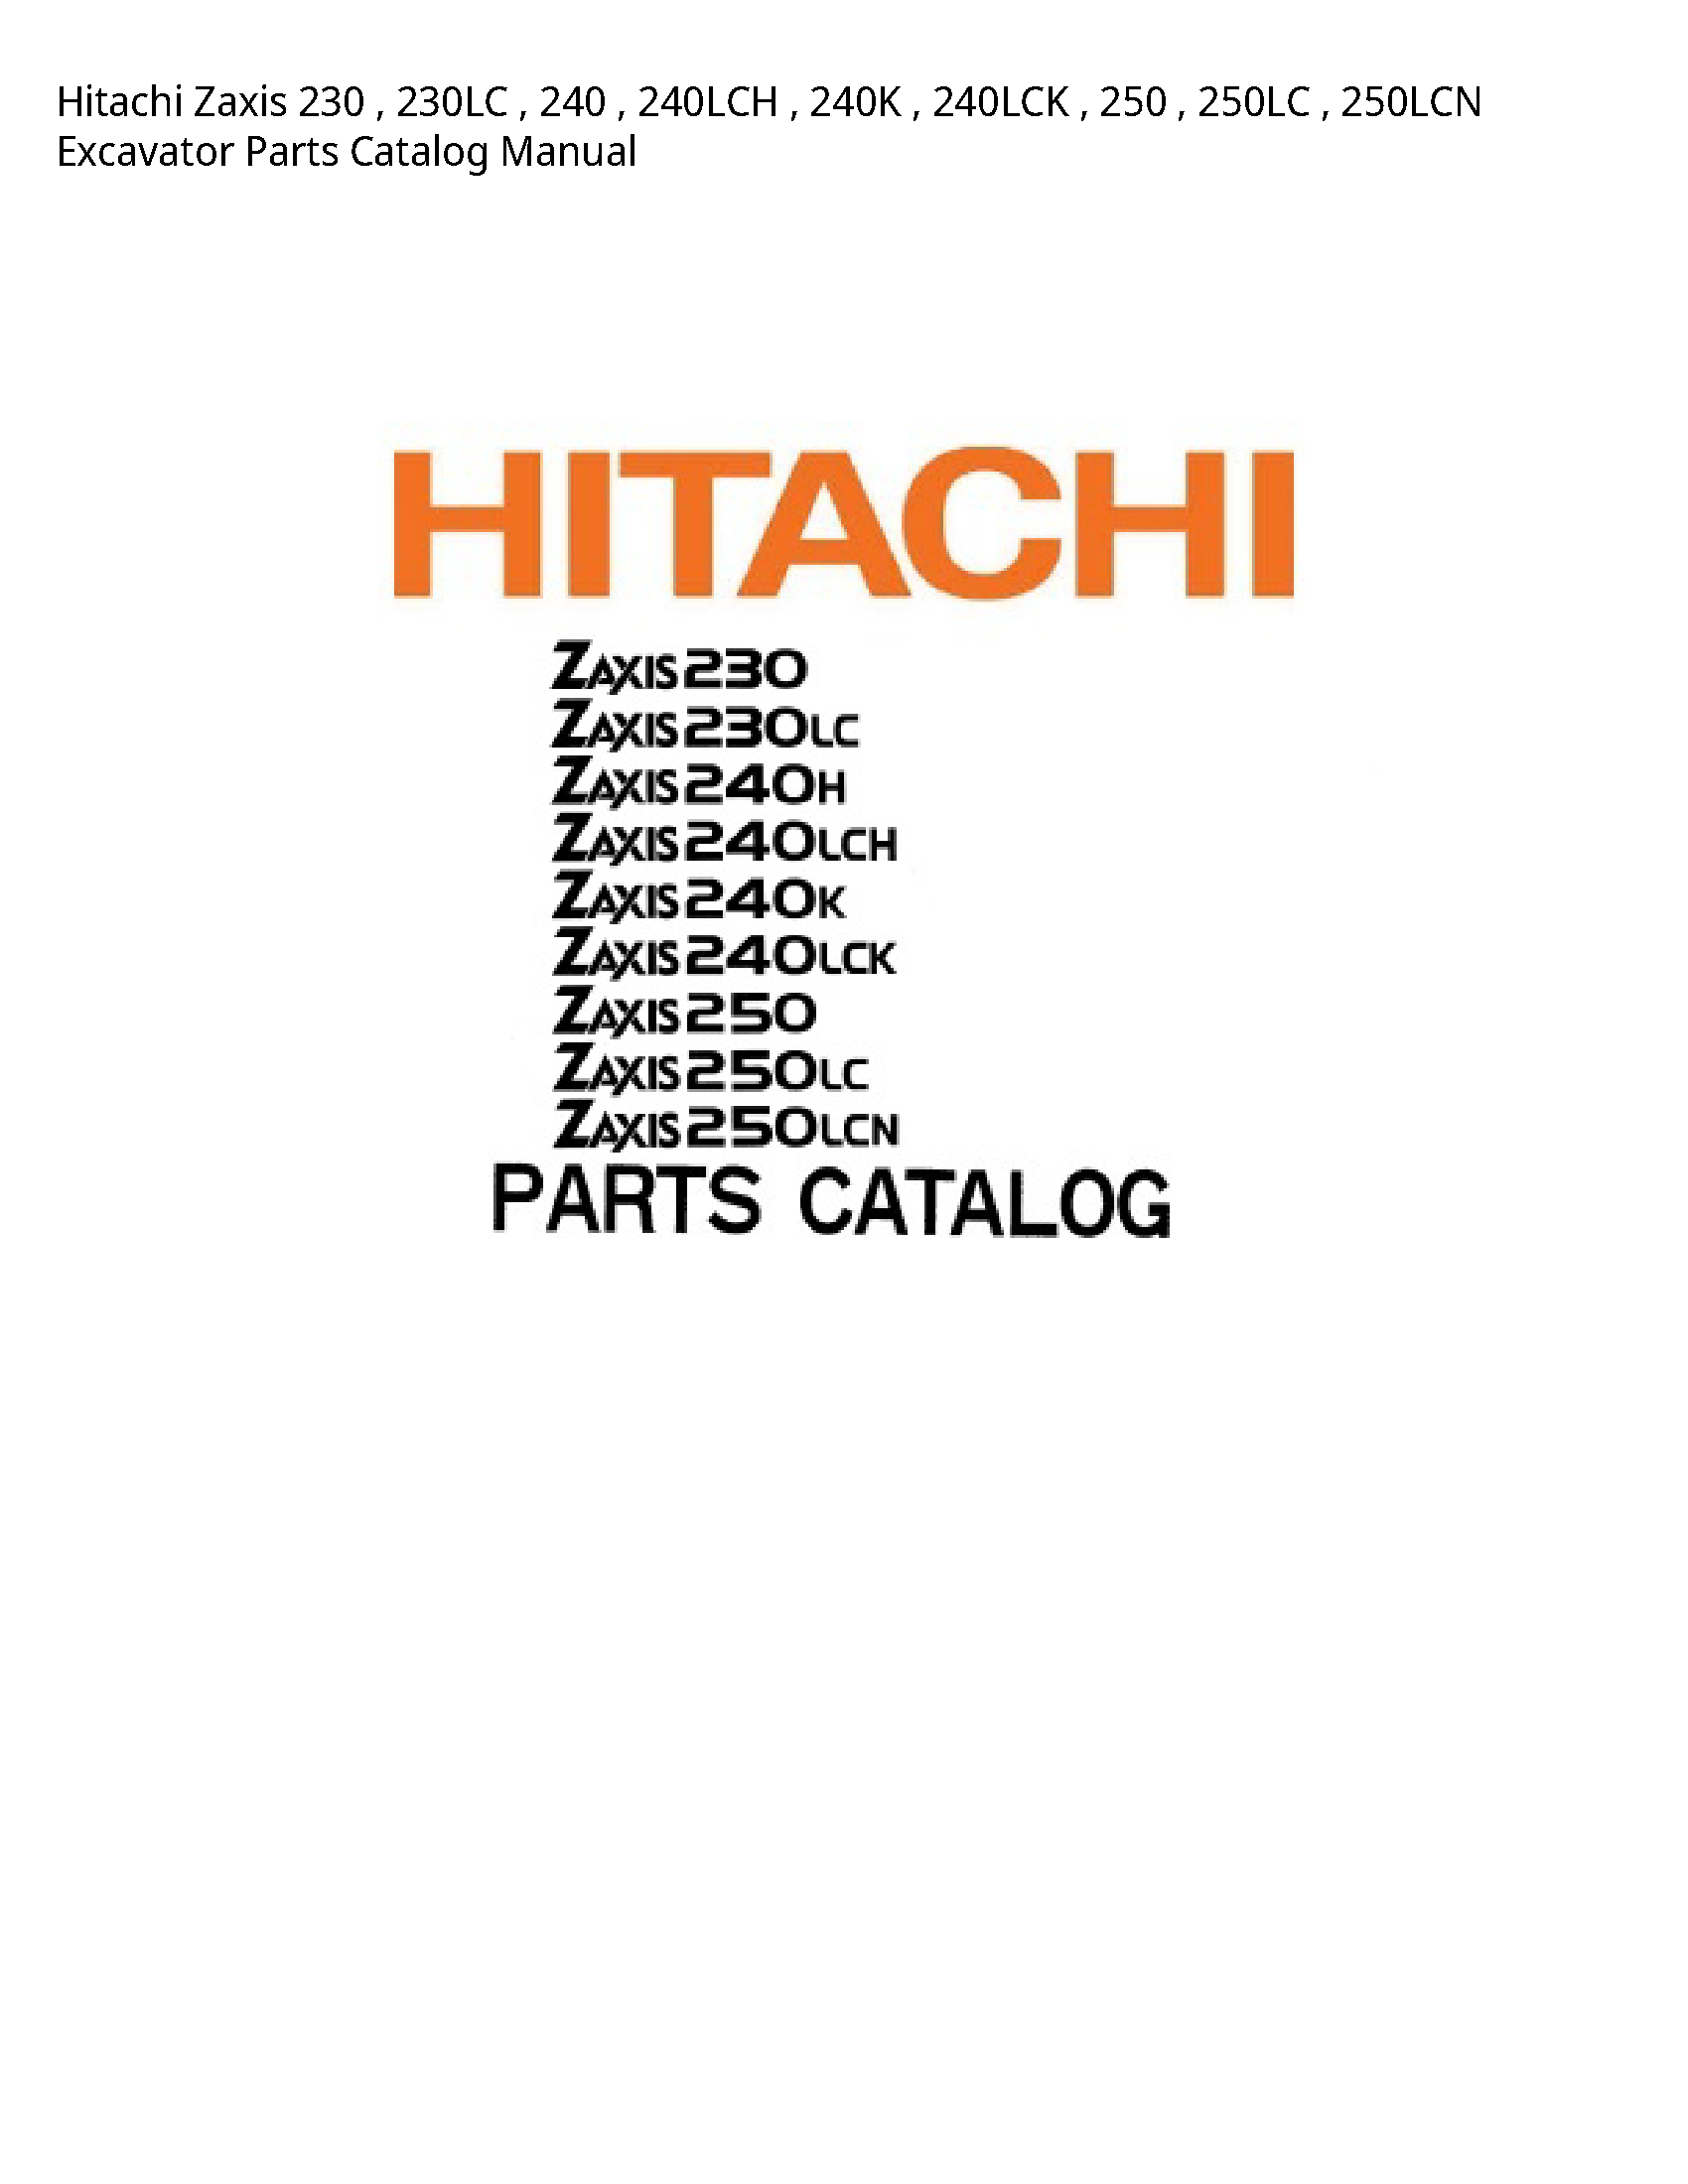 Hitachi 230 Zaxis Excavator Parts Catalog manual